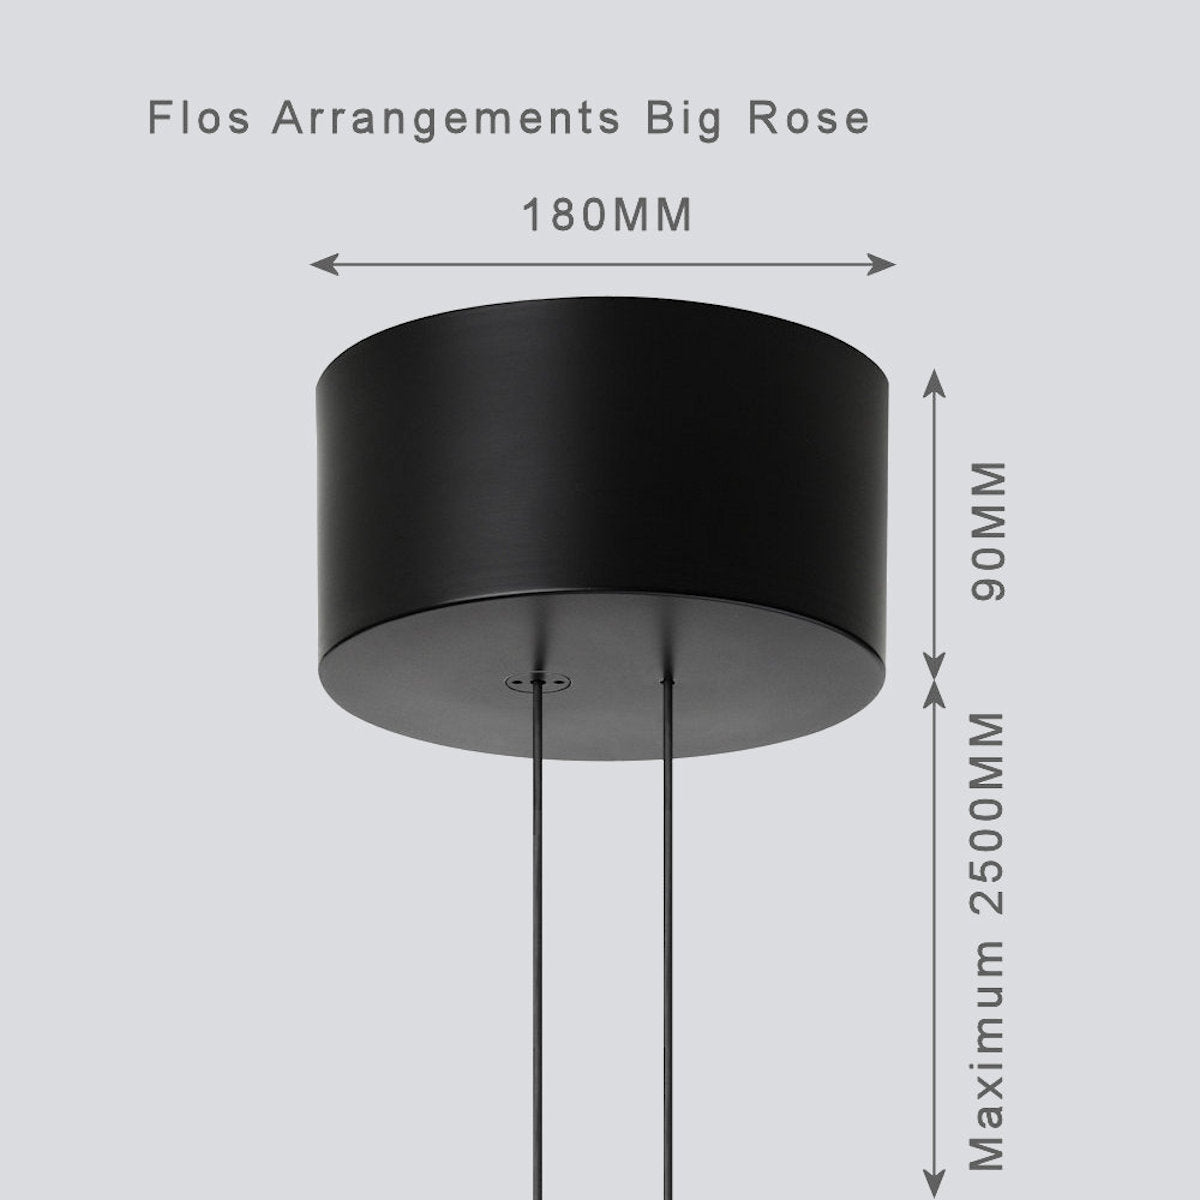 Flos Arrangements Ceiling Roses